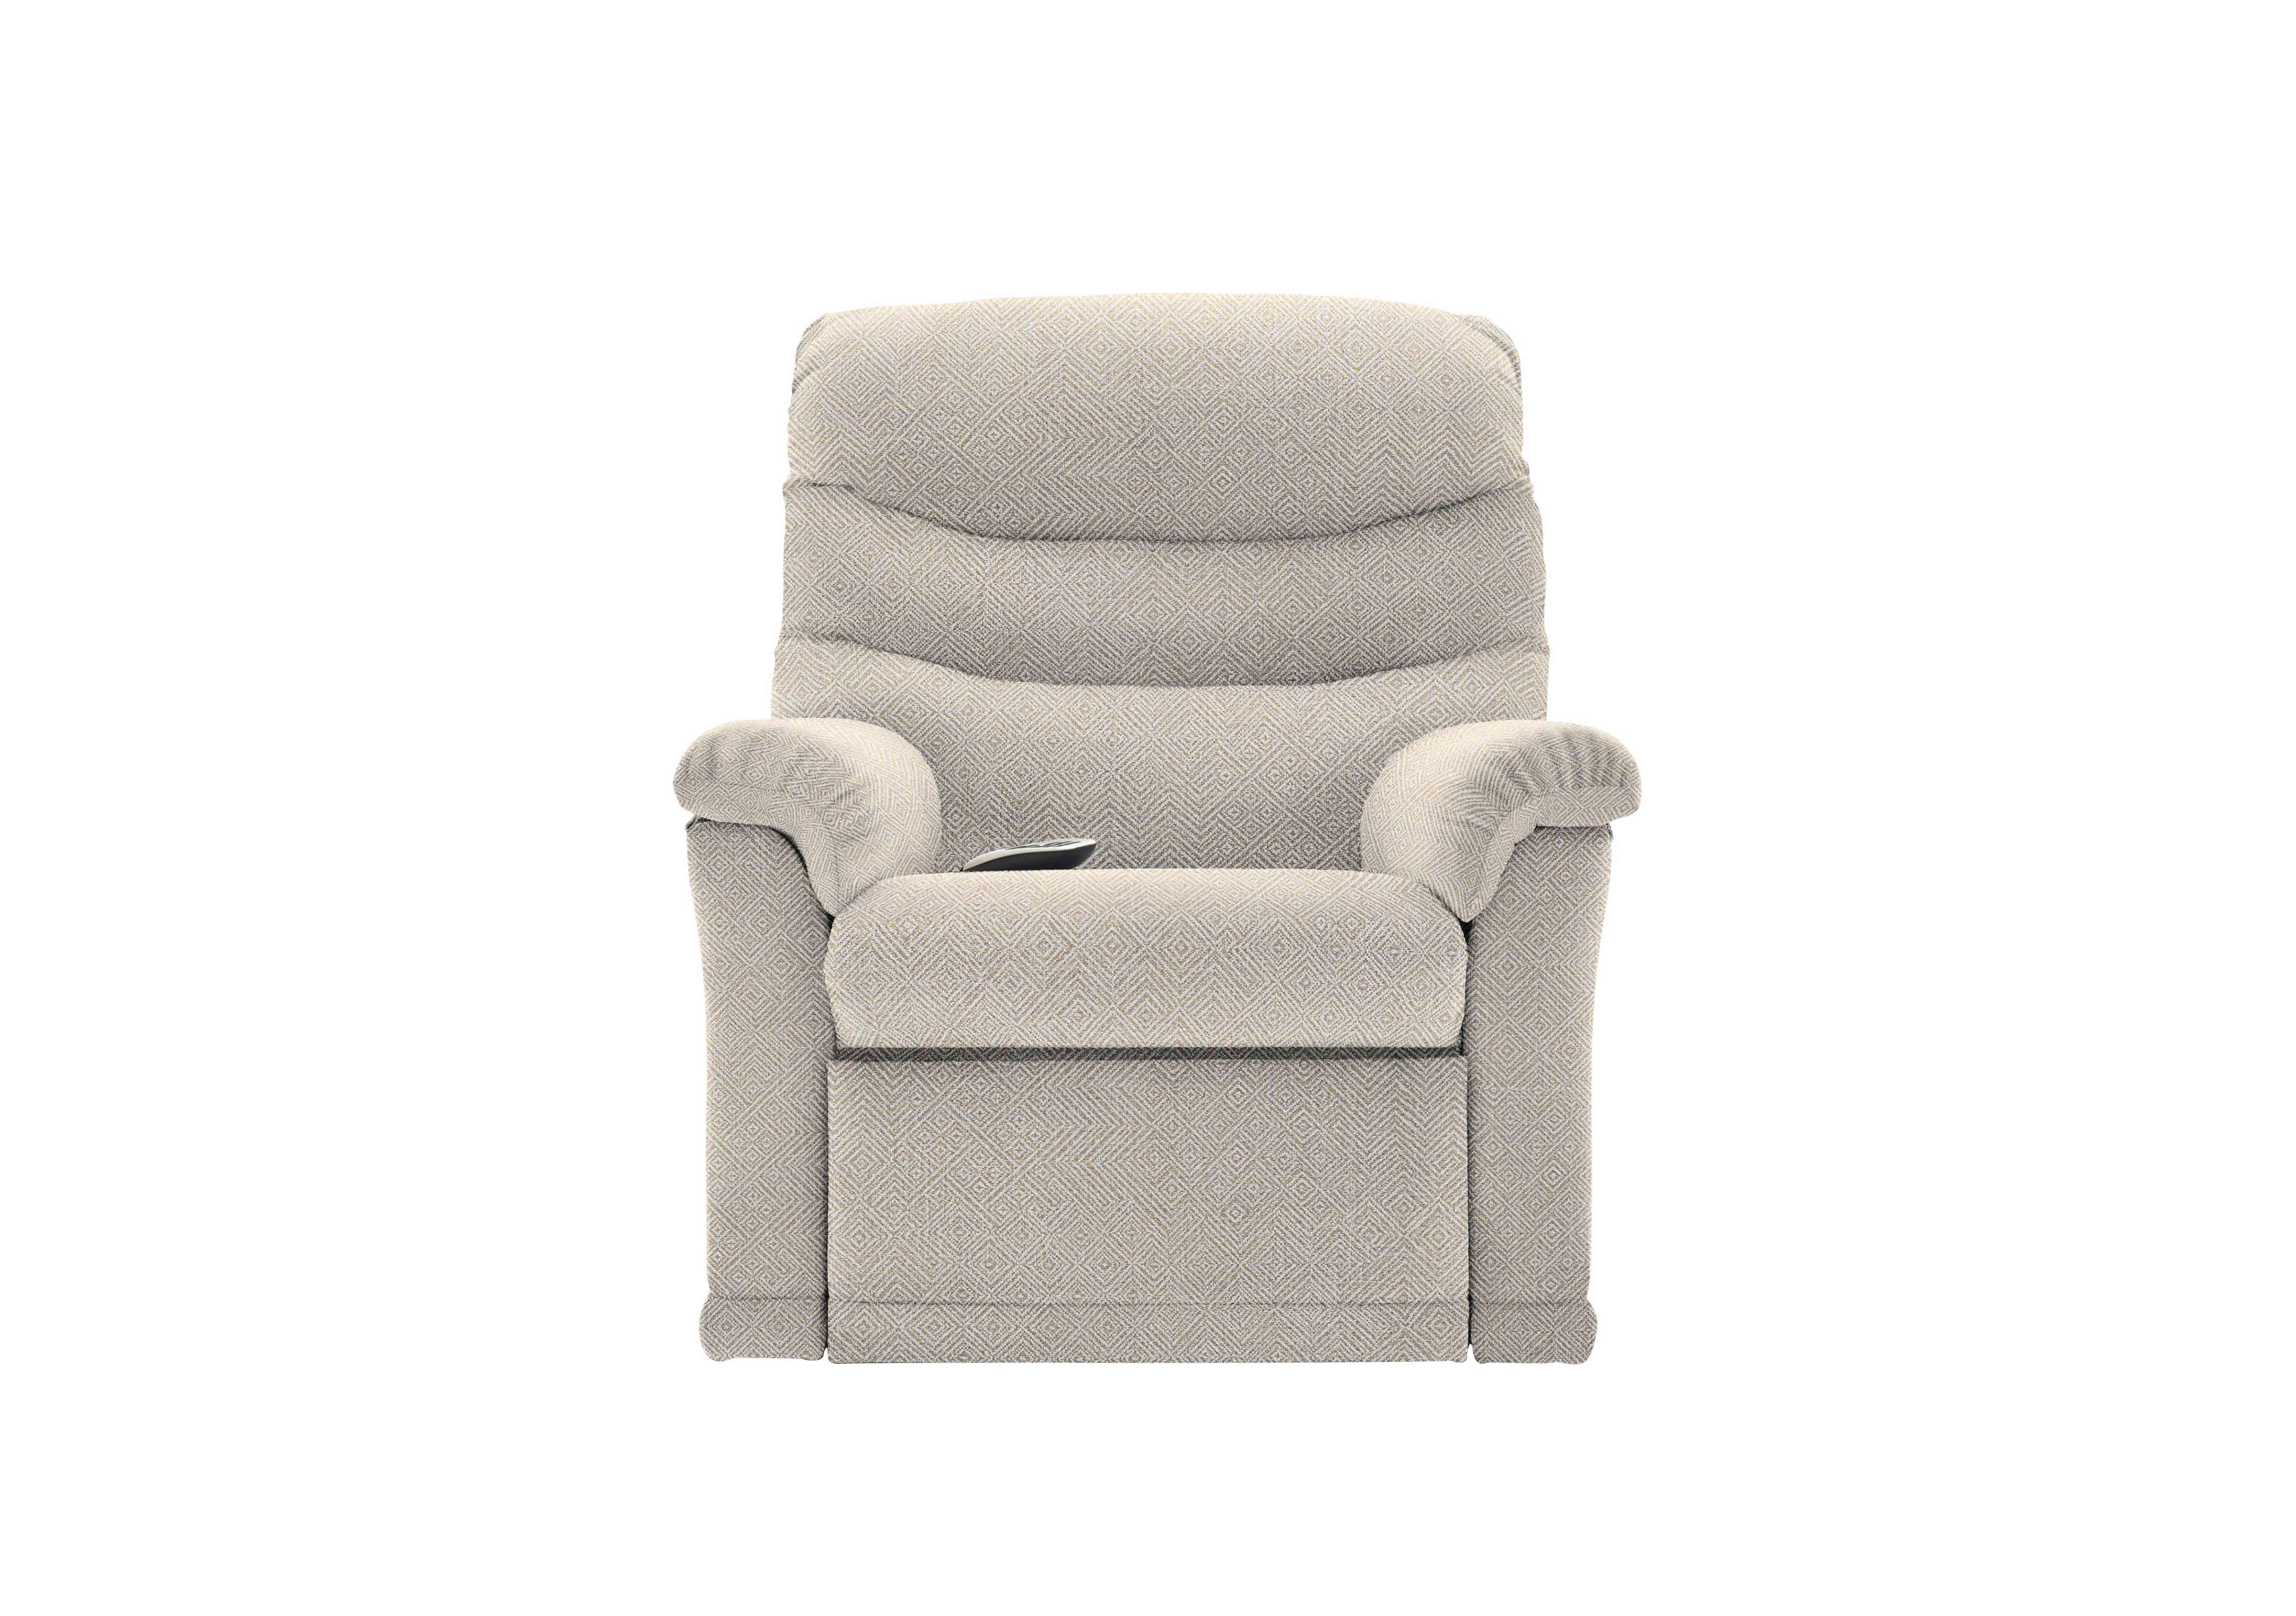 Malvern Fabric Small Rise and Recline Armchair in B011 Nebular Blush on Furniture Village